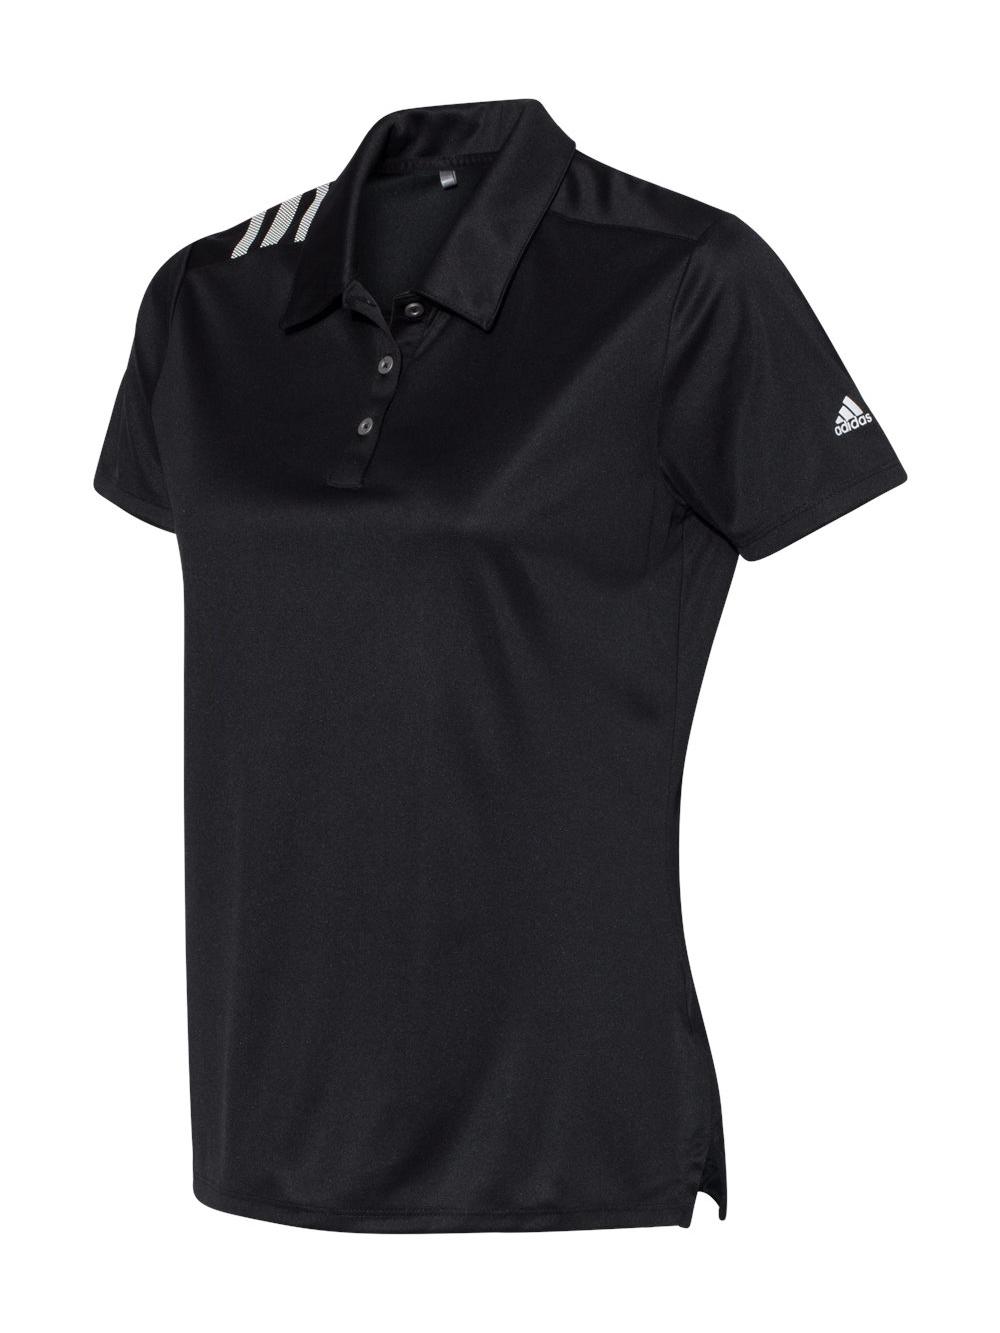 Adidas - Women's 3-Stripes Shoulder Polo - A325 - Black/ White - Size: 3XL - image 1 of 3